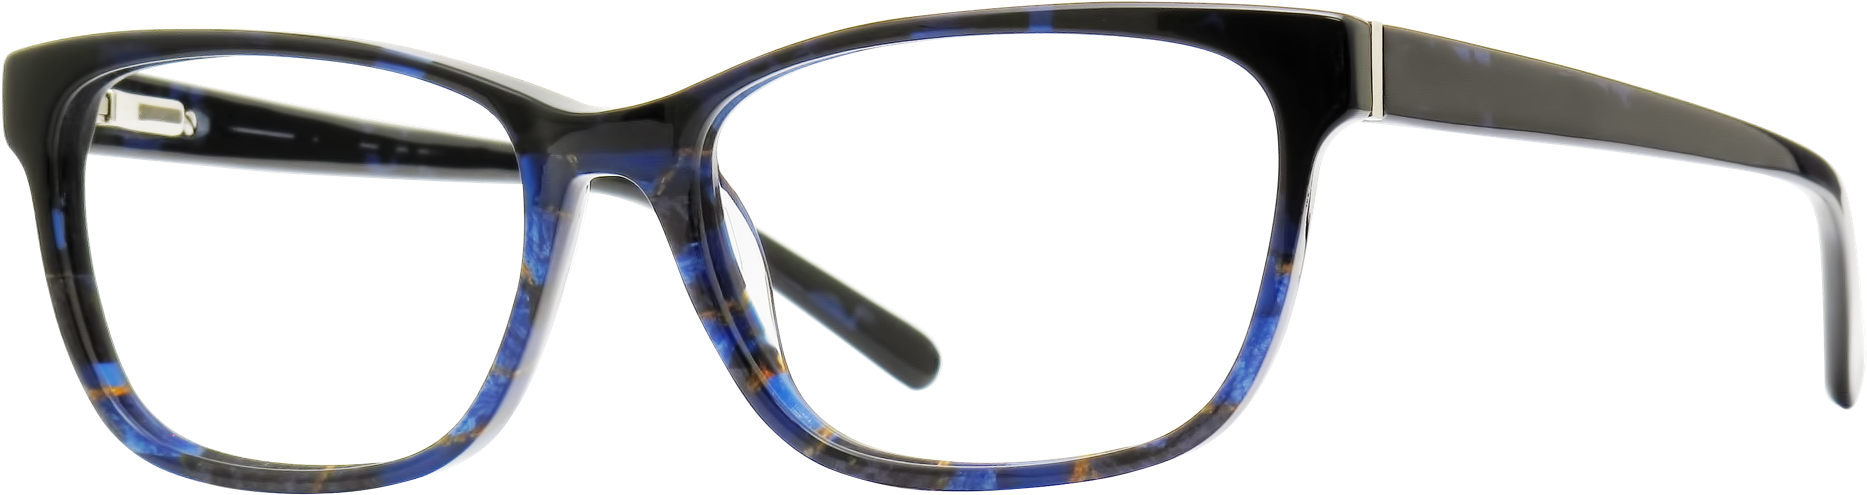 London Fog India Eyeglasses-blue Marble - Glasses (1920x549), Png Download